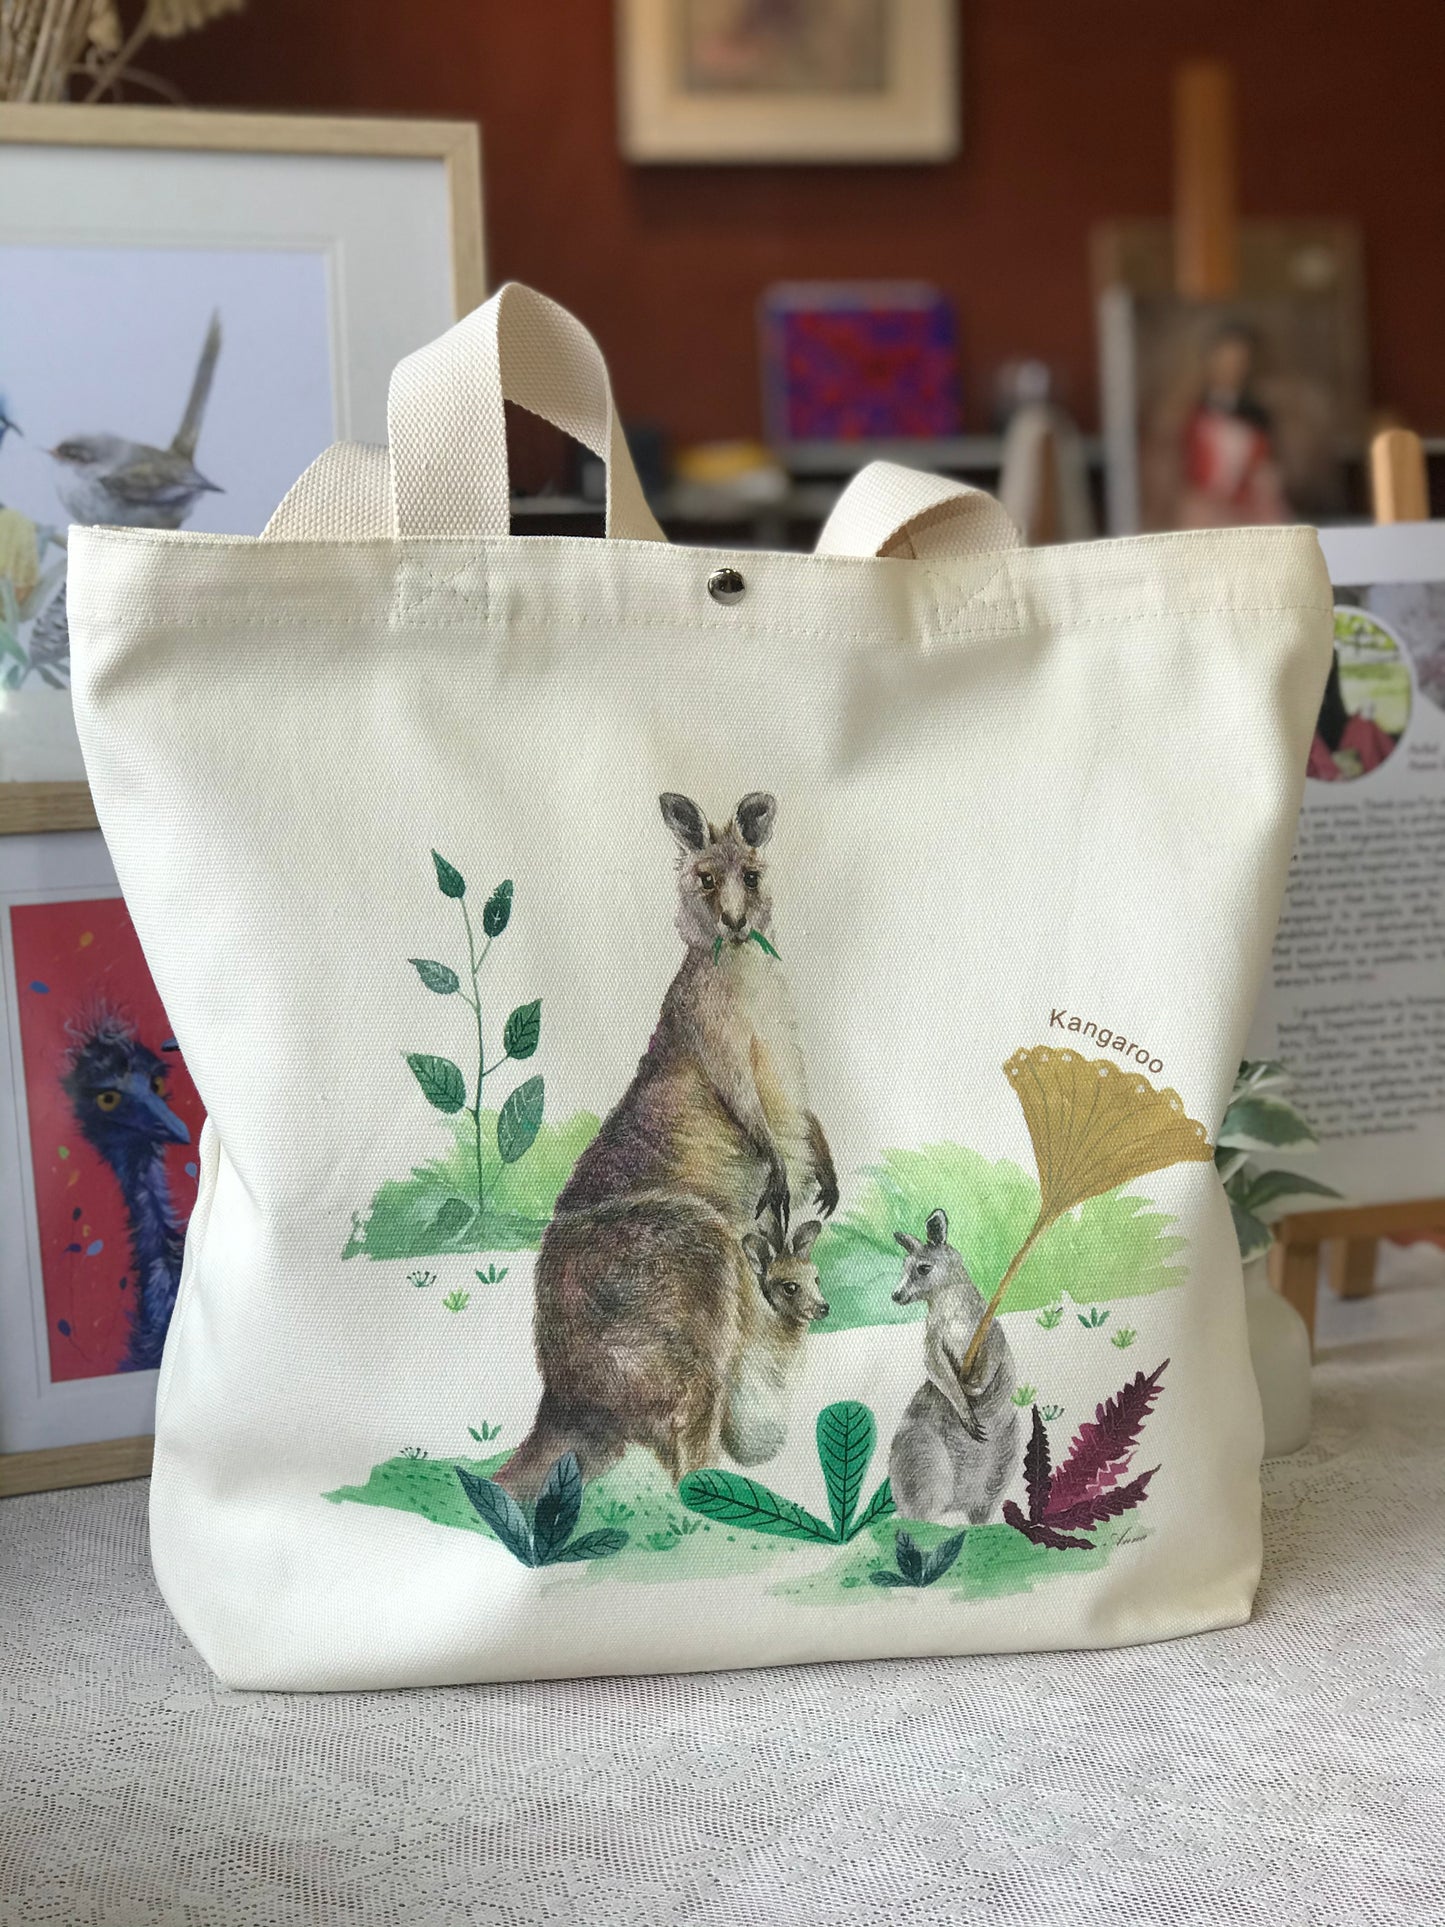 Kangaroo Tote Bag,art bag,gift,Australian animal